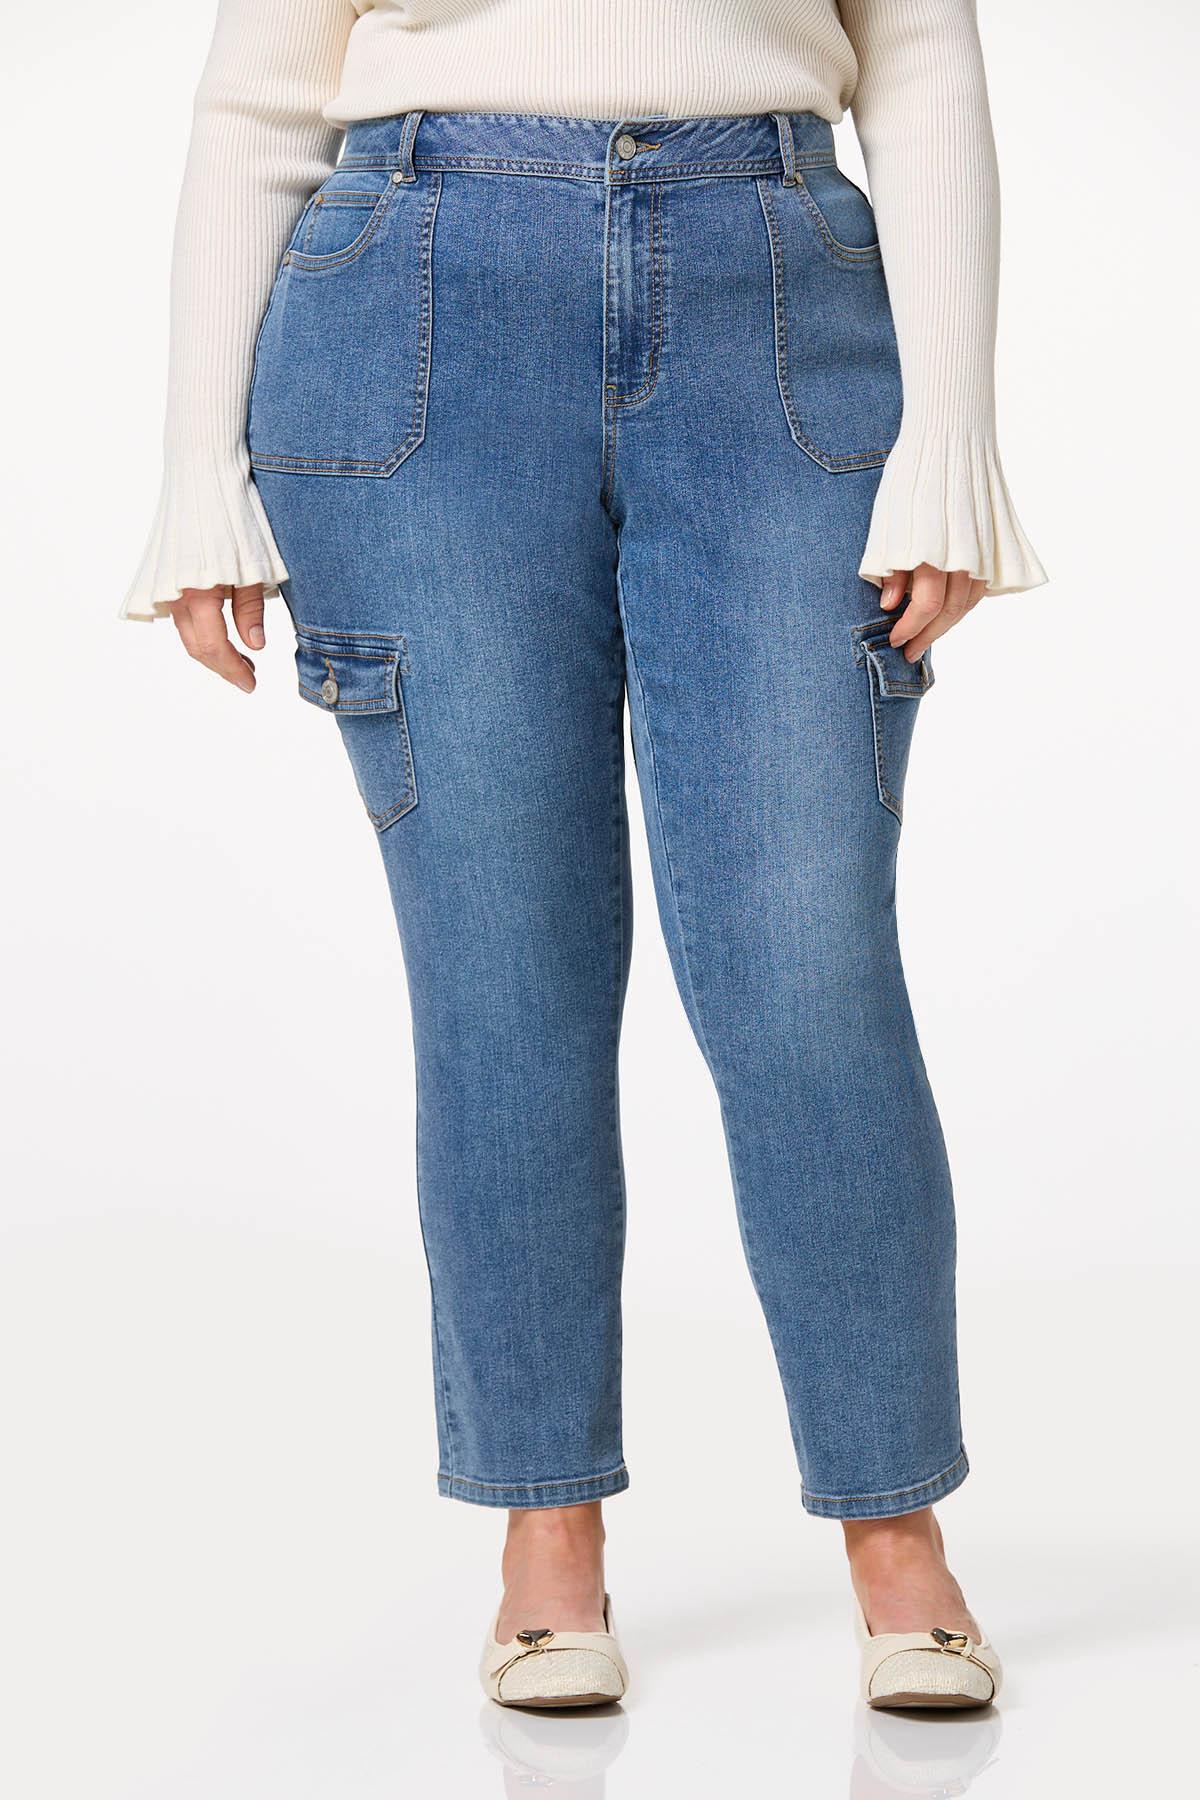 Cato Fashions  Cato Plus Size High Rise Cargo Jeans